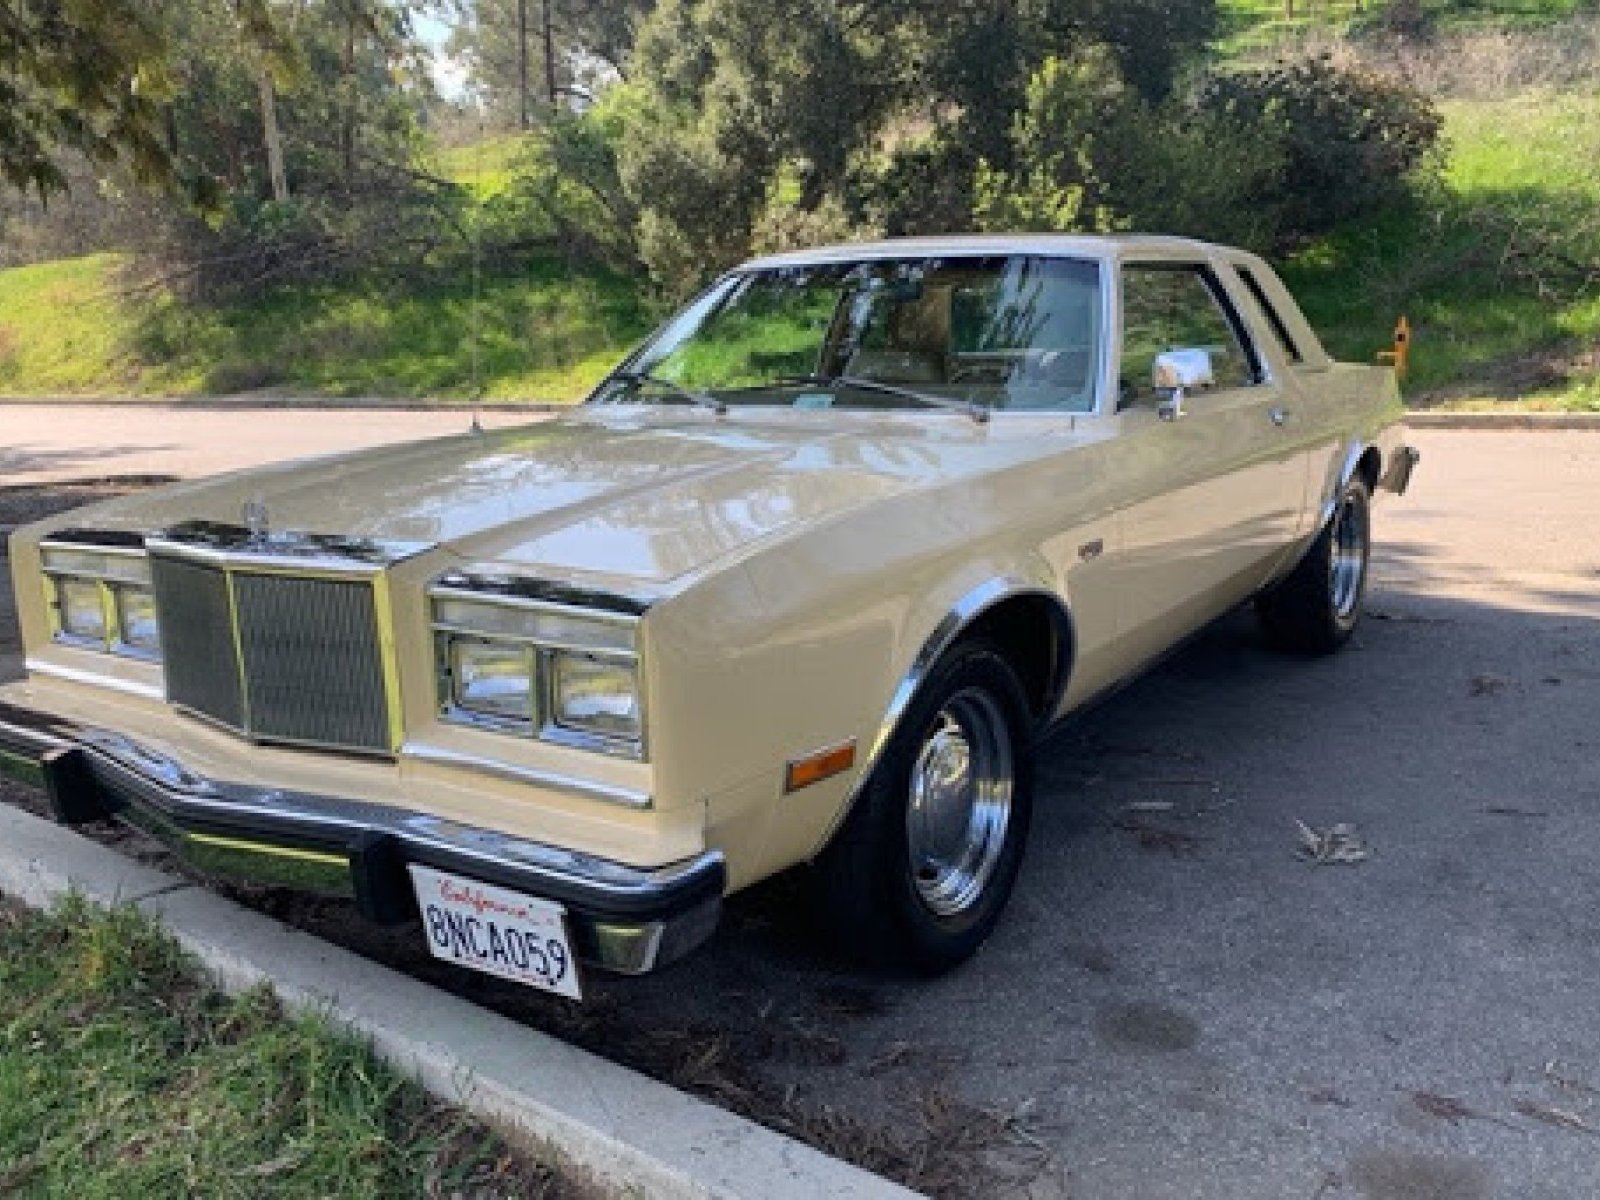 1980 Chrysler LeBaron